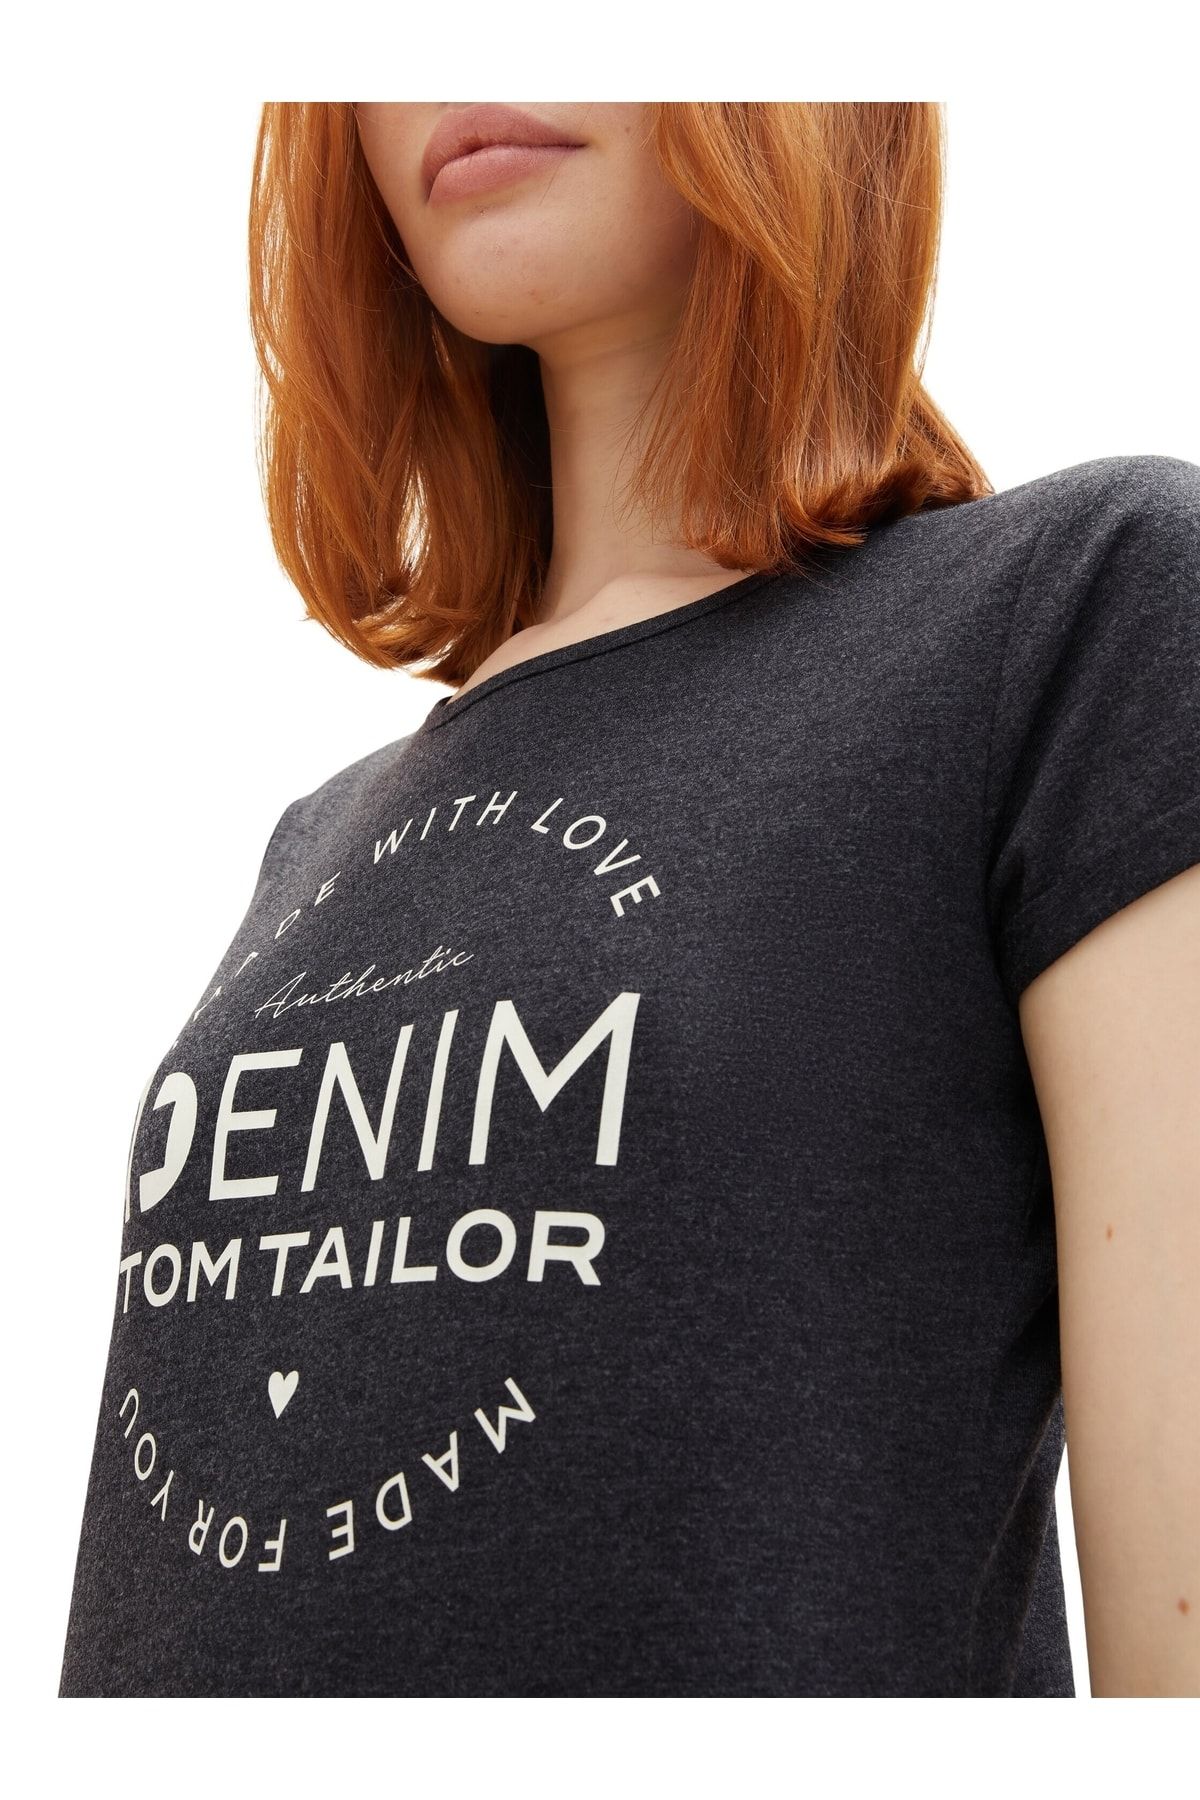 Tom Tailor Denim T-Shirt - Black - Regular fit - Trendyol